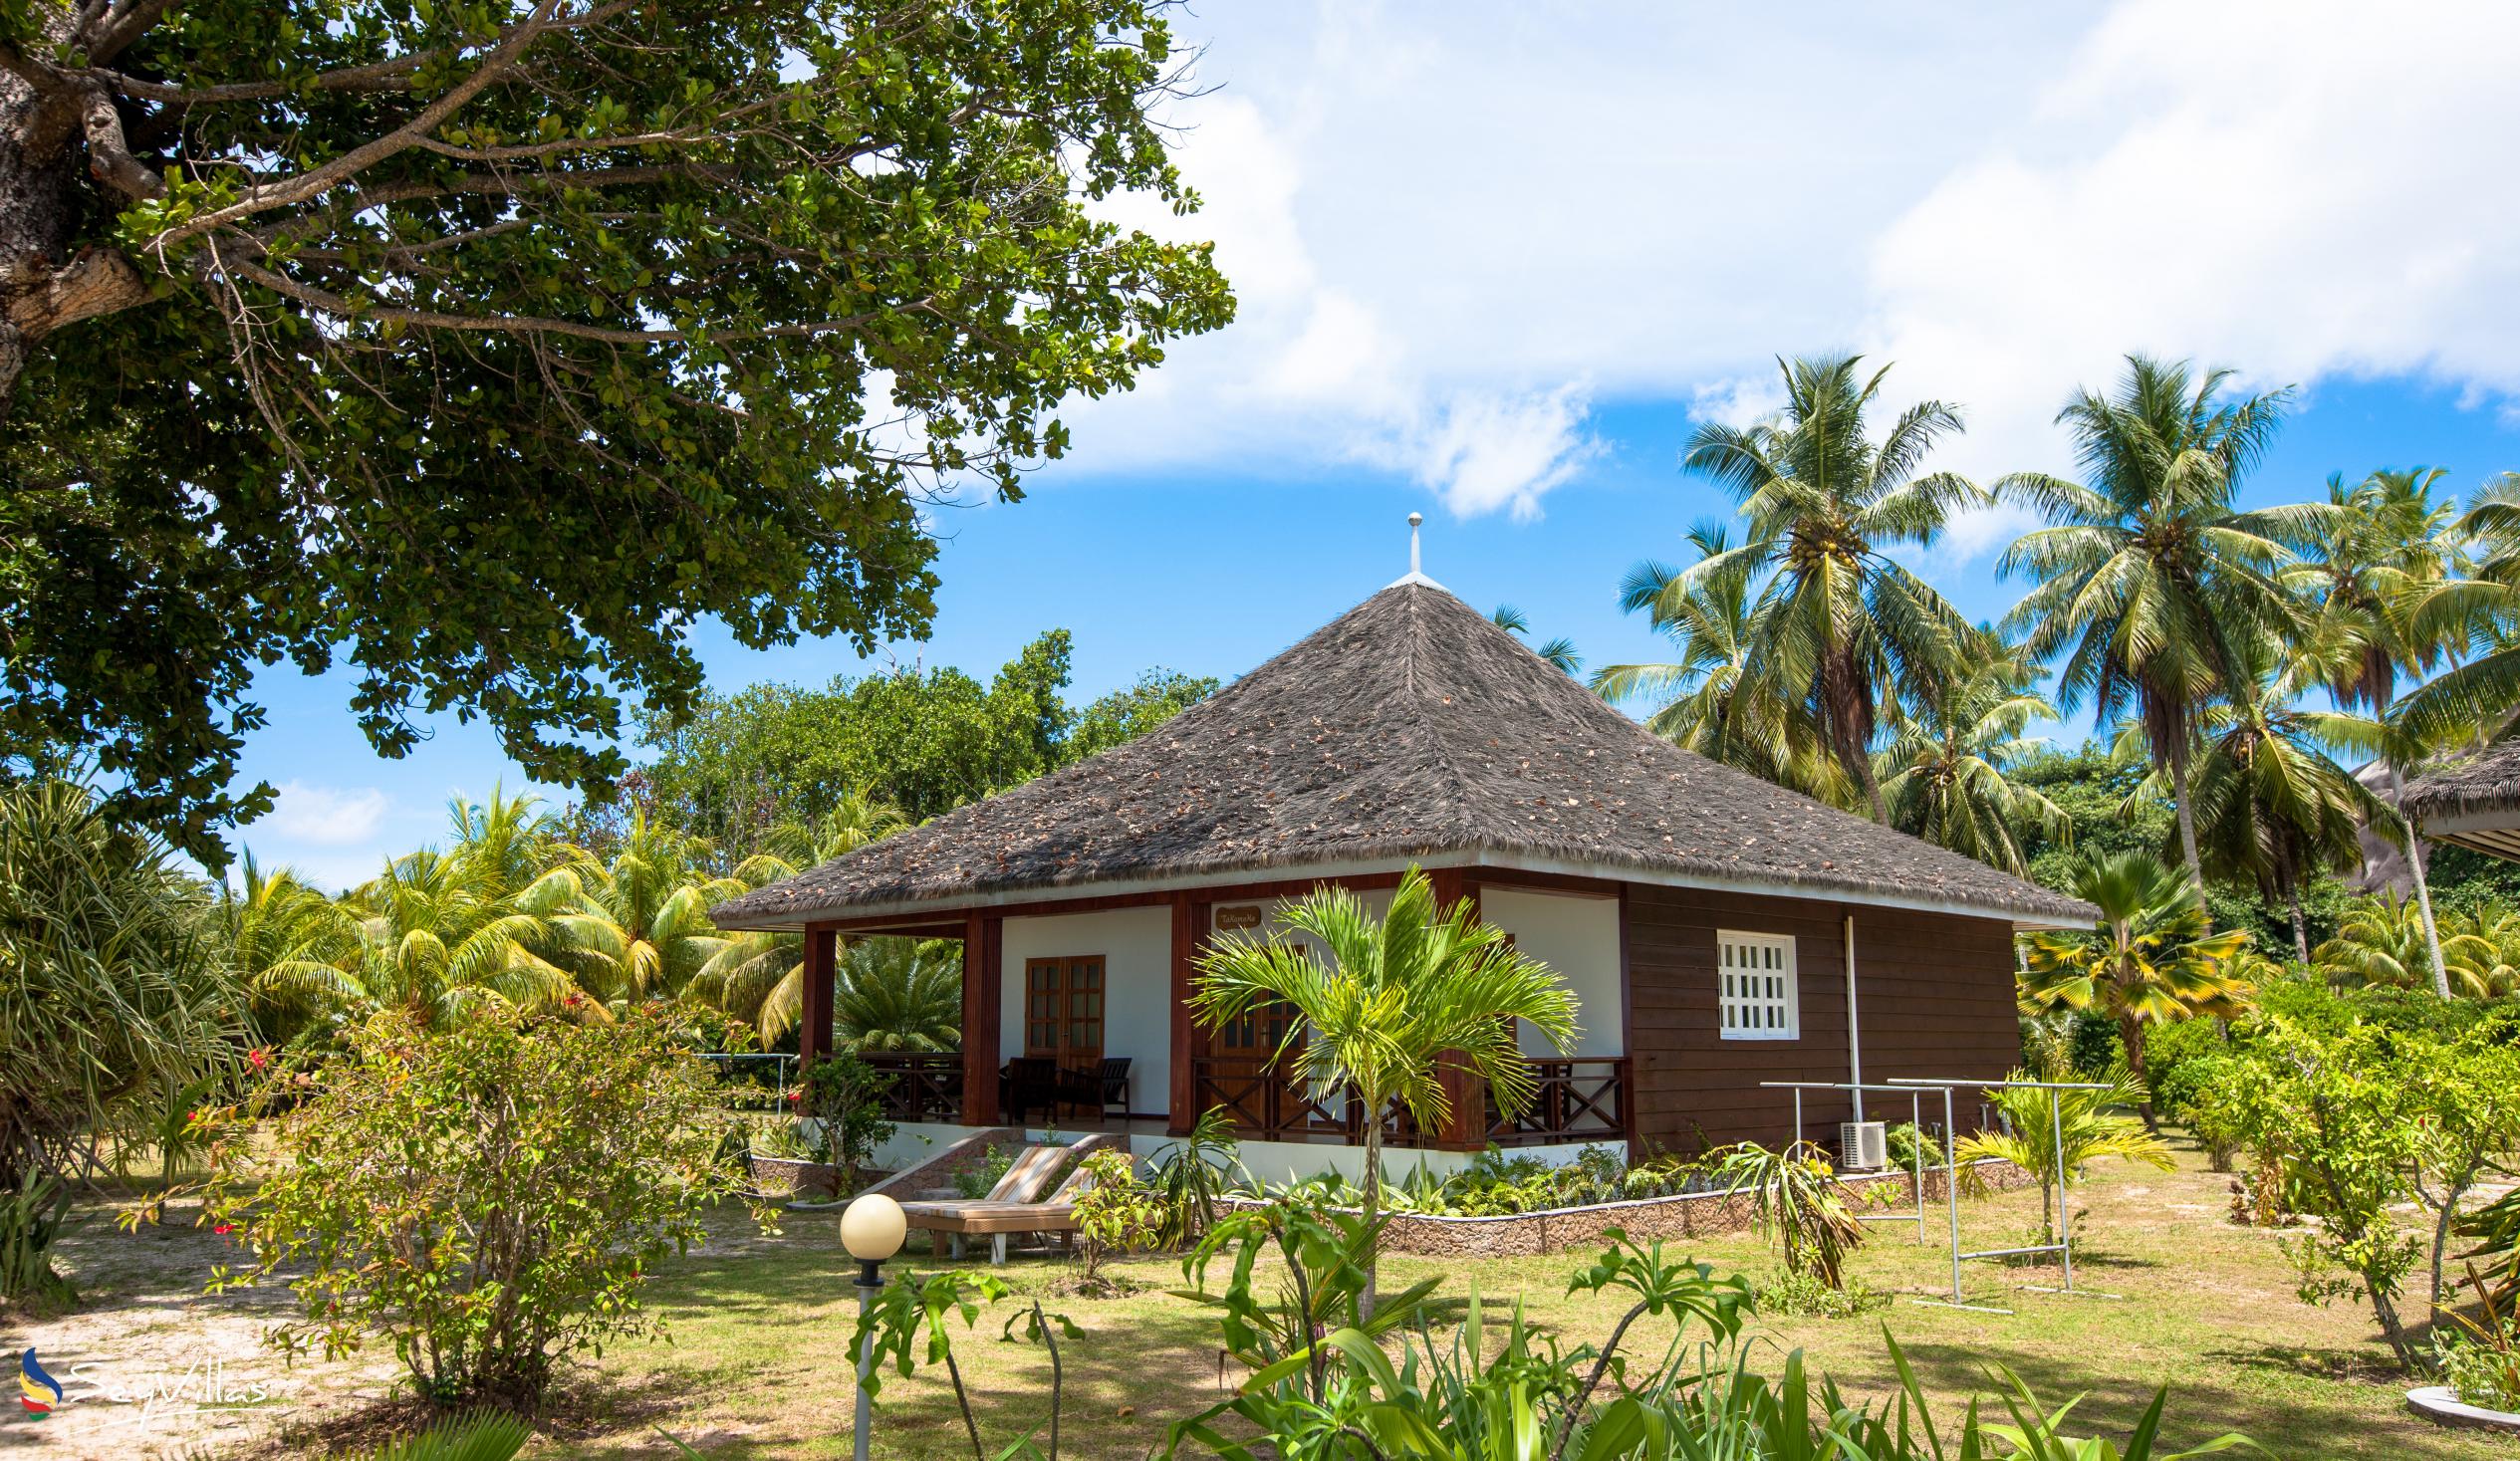 Photo 3: La Digue Island Lodge (L'Union Beach Villas) - Outdoor area - La Digue (Seychelles)